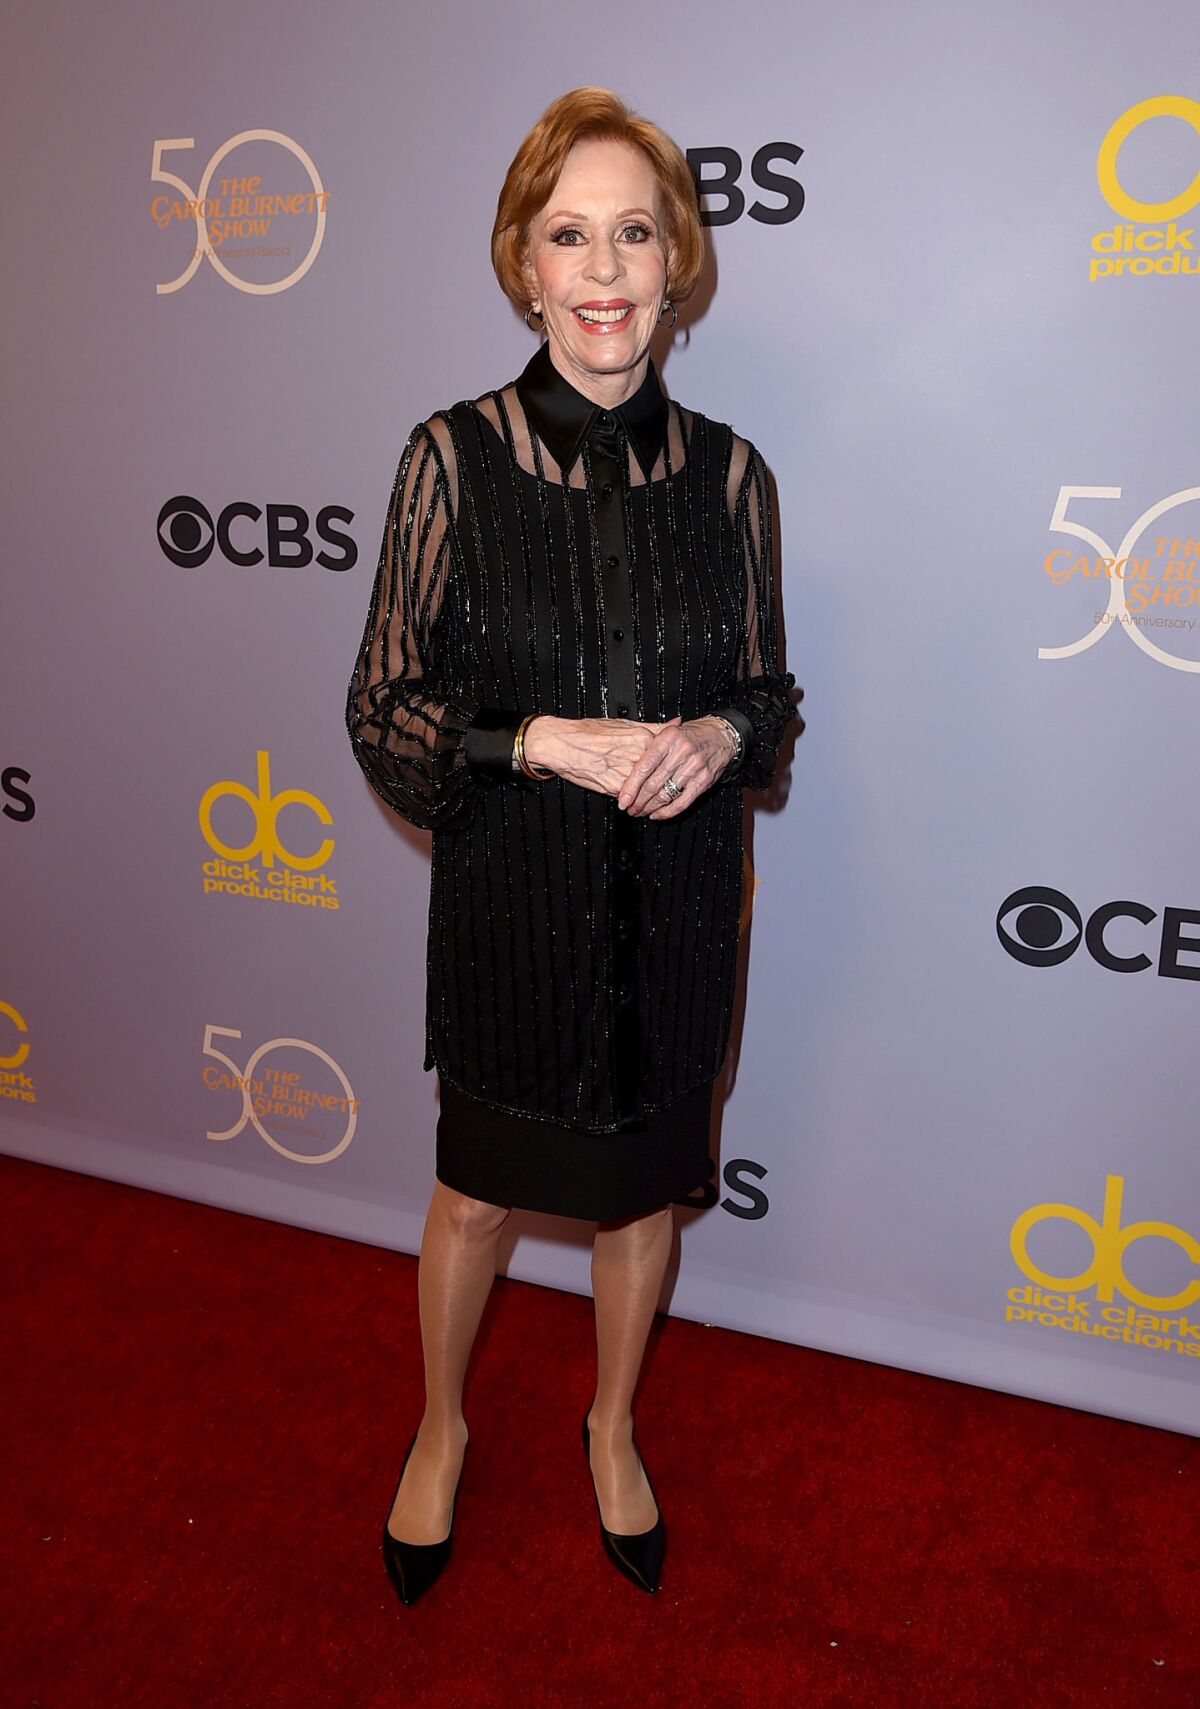 Carol Burnett at the "The Carol Burnett Show 50th Anniversary Special" at CBS Televison City on October 4, 2017 in Los Angeles, California.